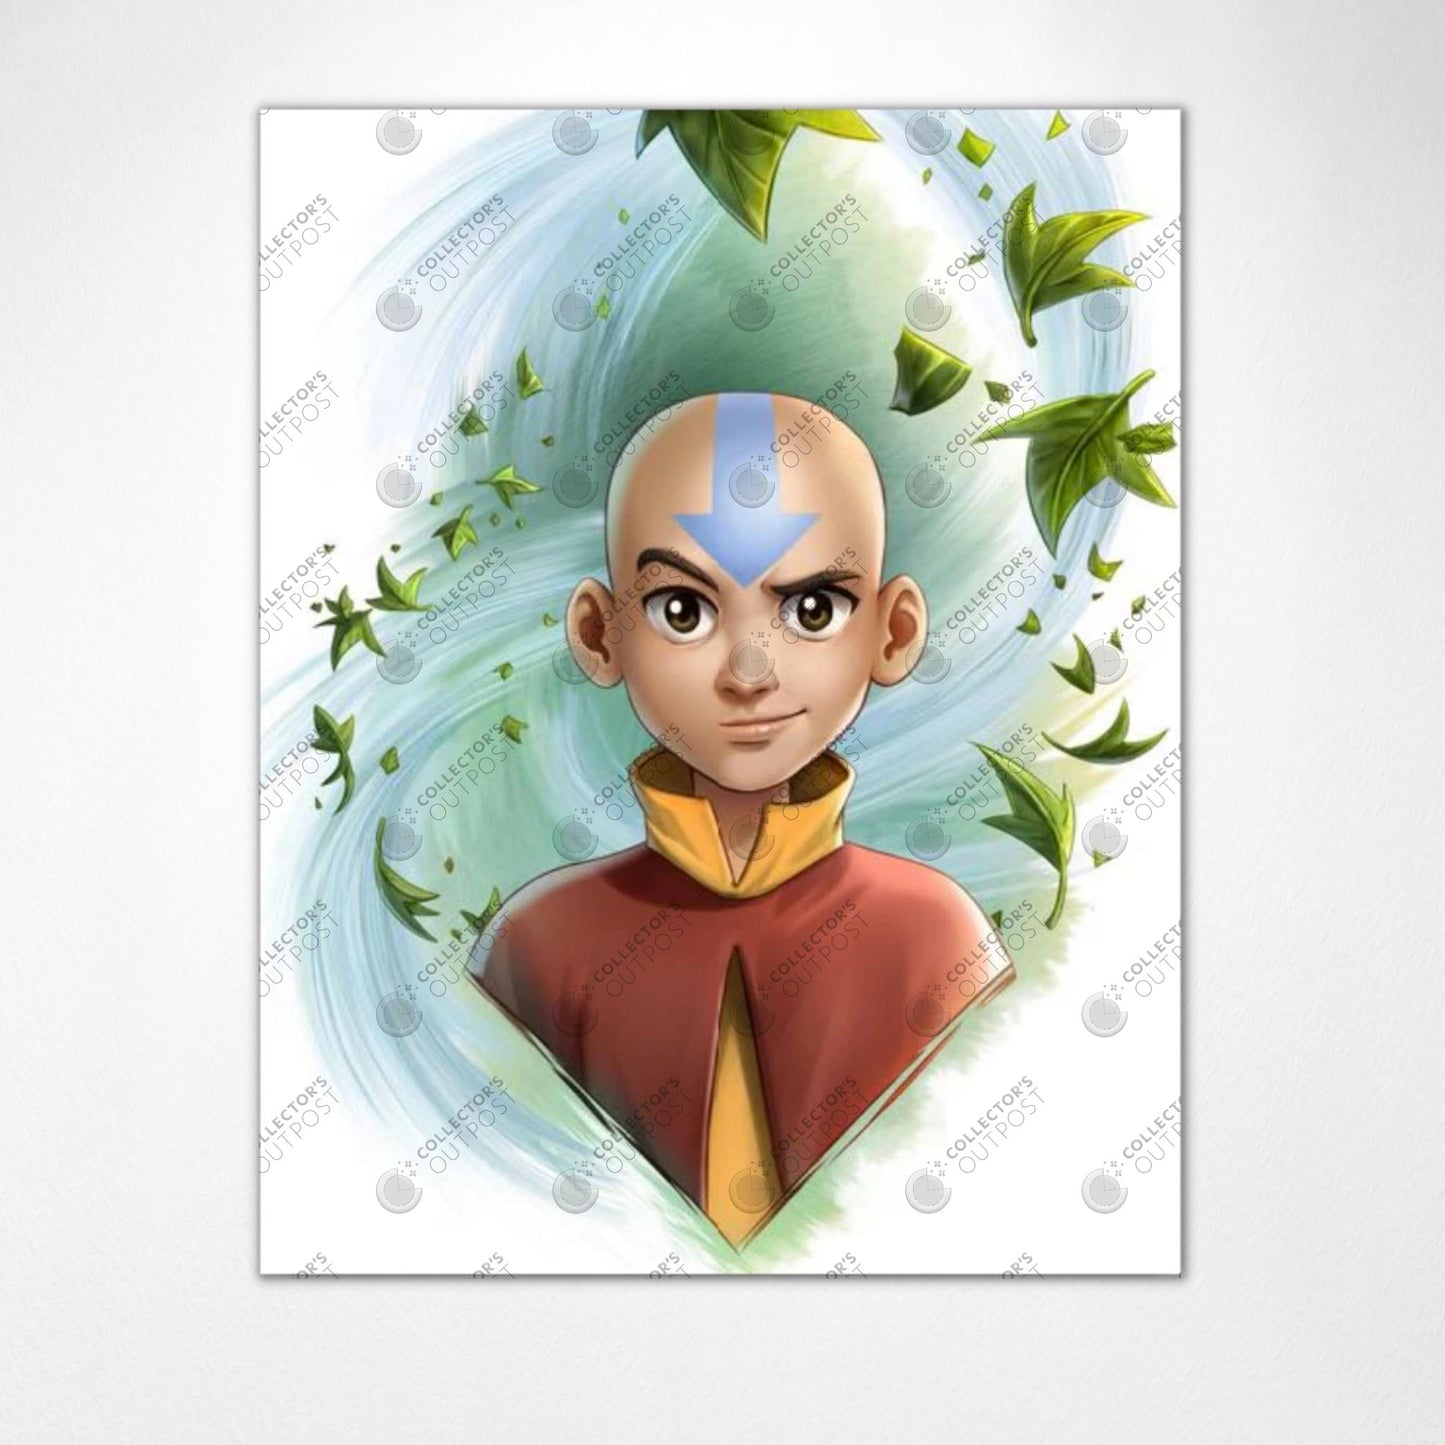 Aang The Chosen One (Avatar: The Last Airbender) Legacy Portrait Art Print